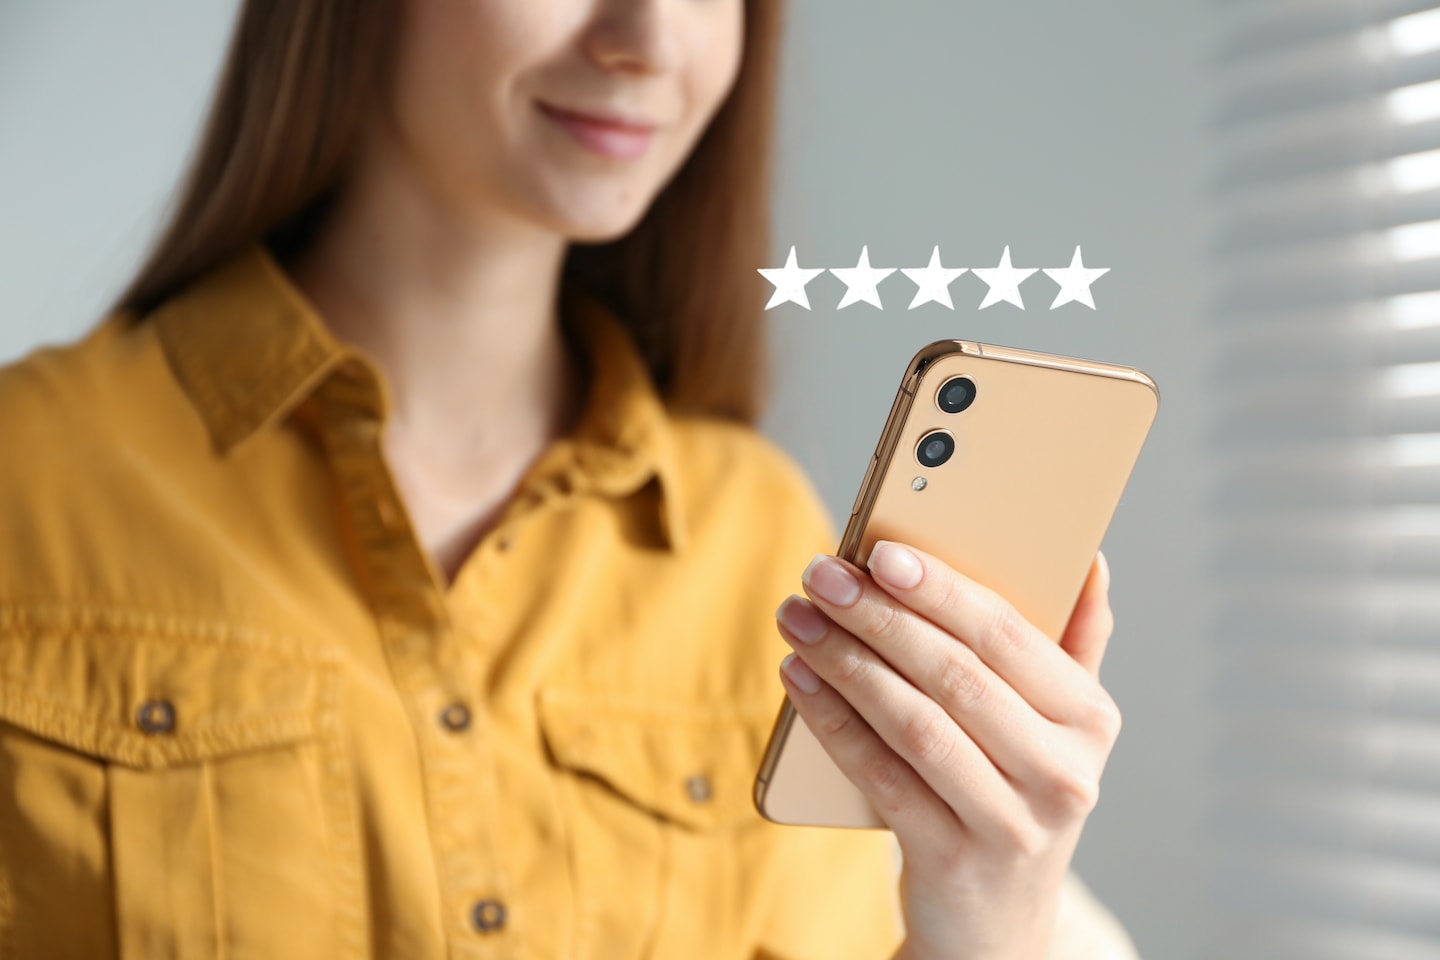 5-star customer reviews